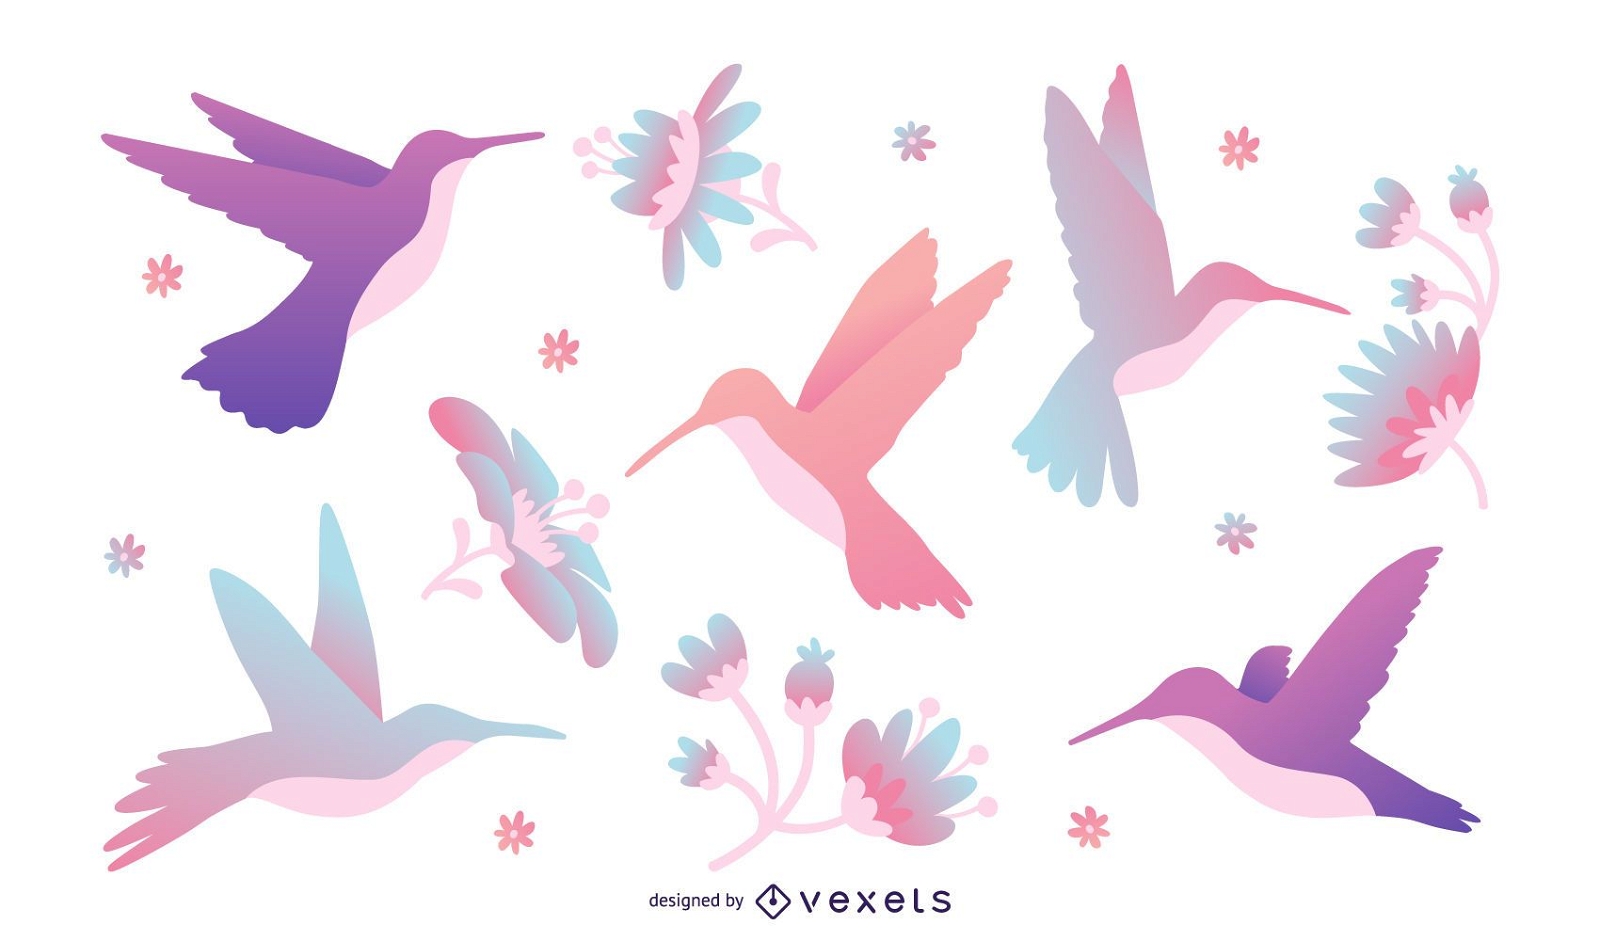 Pastel tones hummingbird illustration set